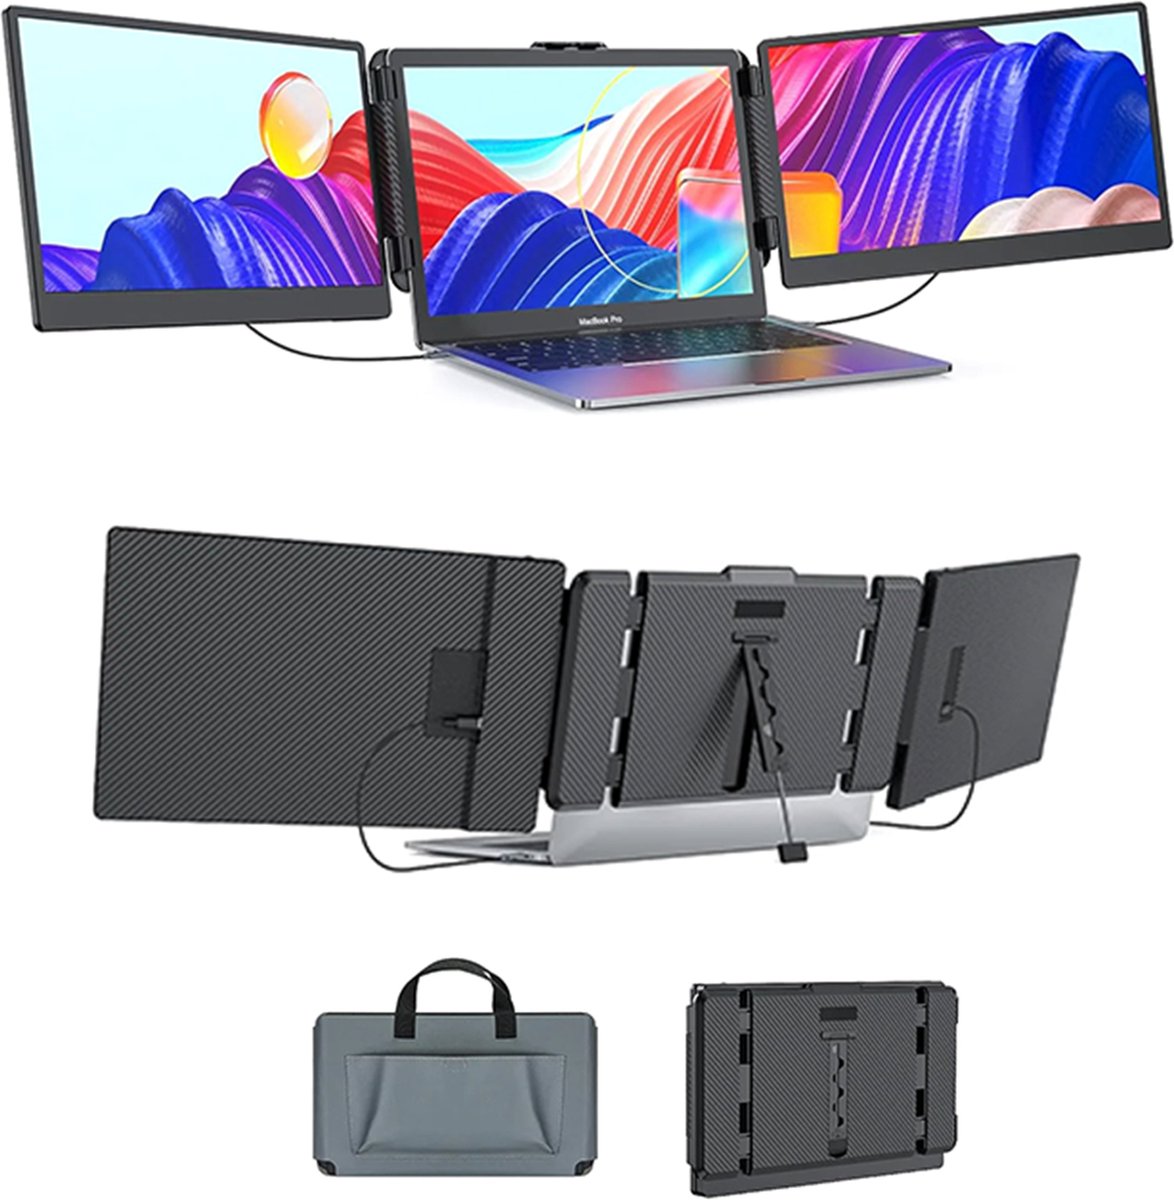 PAEY tri-screen - Portable Monitor- 14 Inch Full HD - Extra beeldscherm laptop - Draagbare monitor - Draagbaar scherm voor laptop- Tri-screen - inclusief draagtas - PAEY